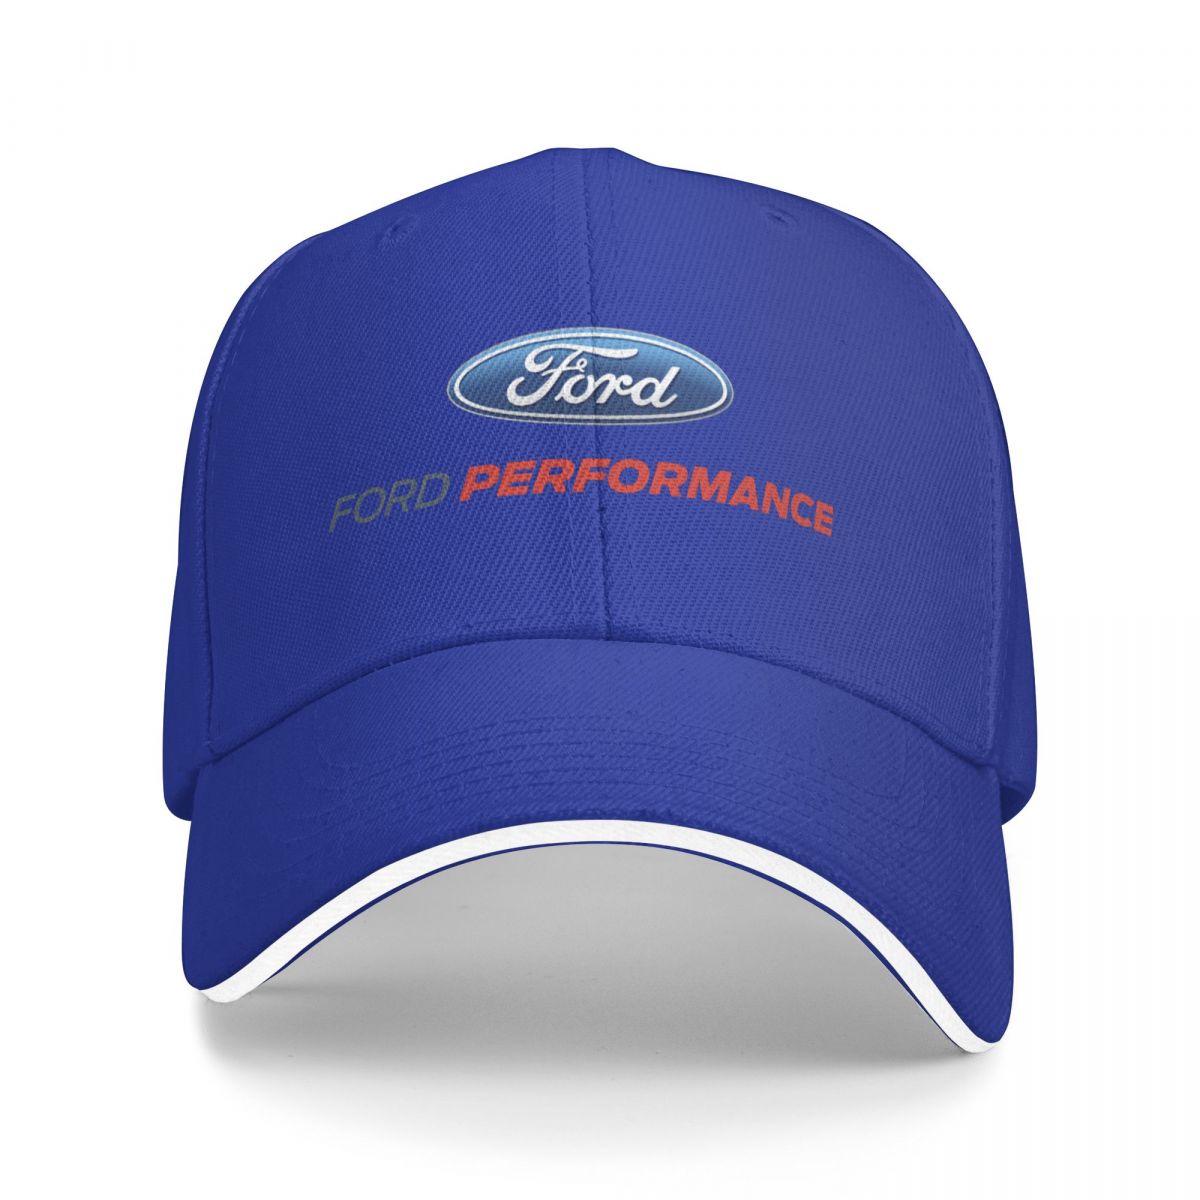 Unisex Cap For Women Men Ford Performance Fashion Baseball Cap Adjustable Outdoor Streetwear Hat